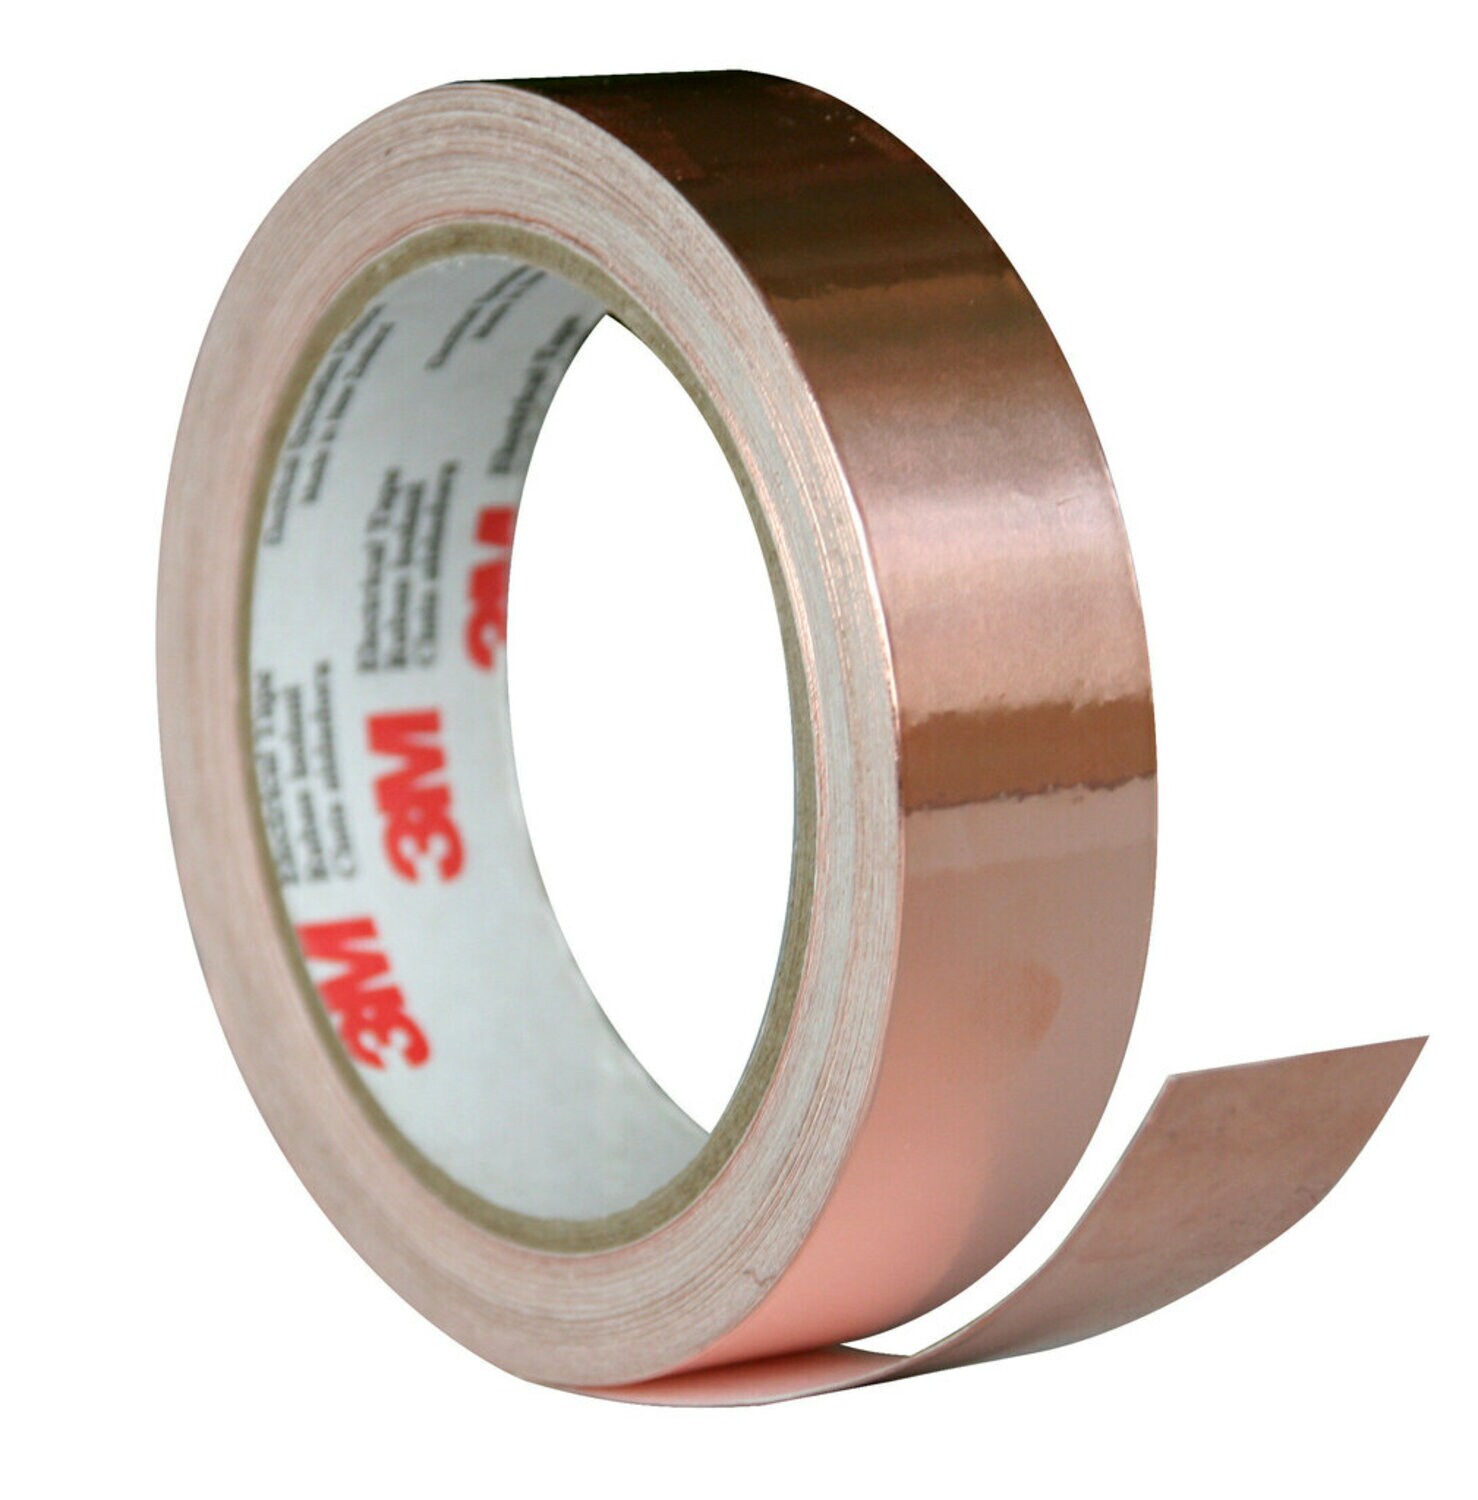 7010350364 - 3M Copper Foil EMI Shielding Tape 1181, 23 in X 60 yd, 3 in Paper Core,
Log Roll, Trimmed, 1 Roll/Case